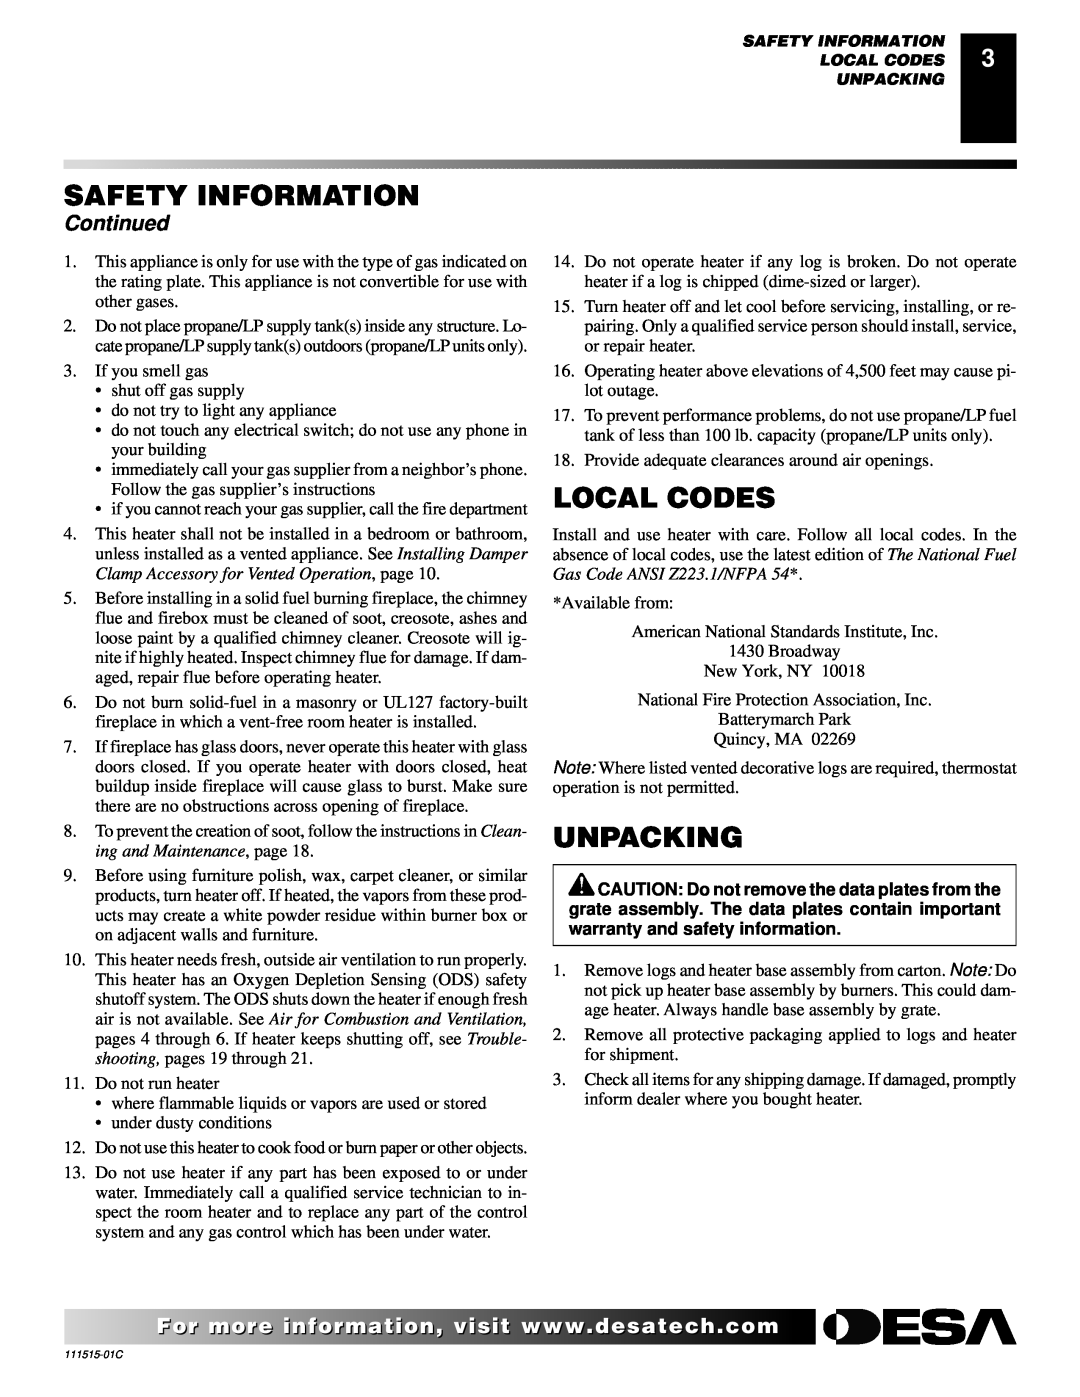 Desa LDL3930PR, LDL3930NR, LDL3924PR installation manual Local Codes, Unpacking, Continued, Safety Information 